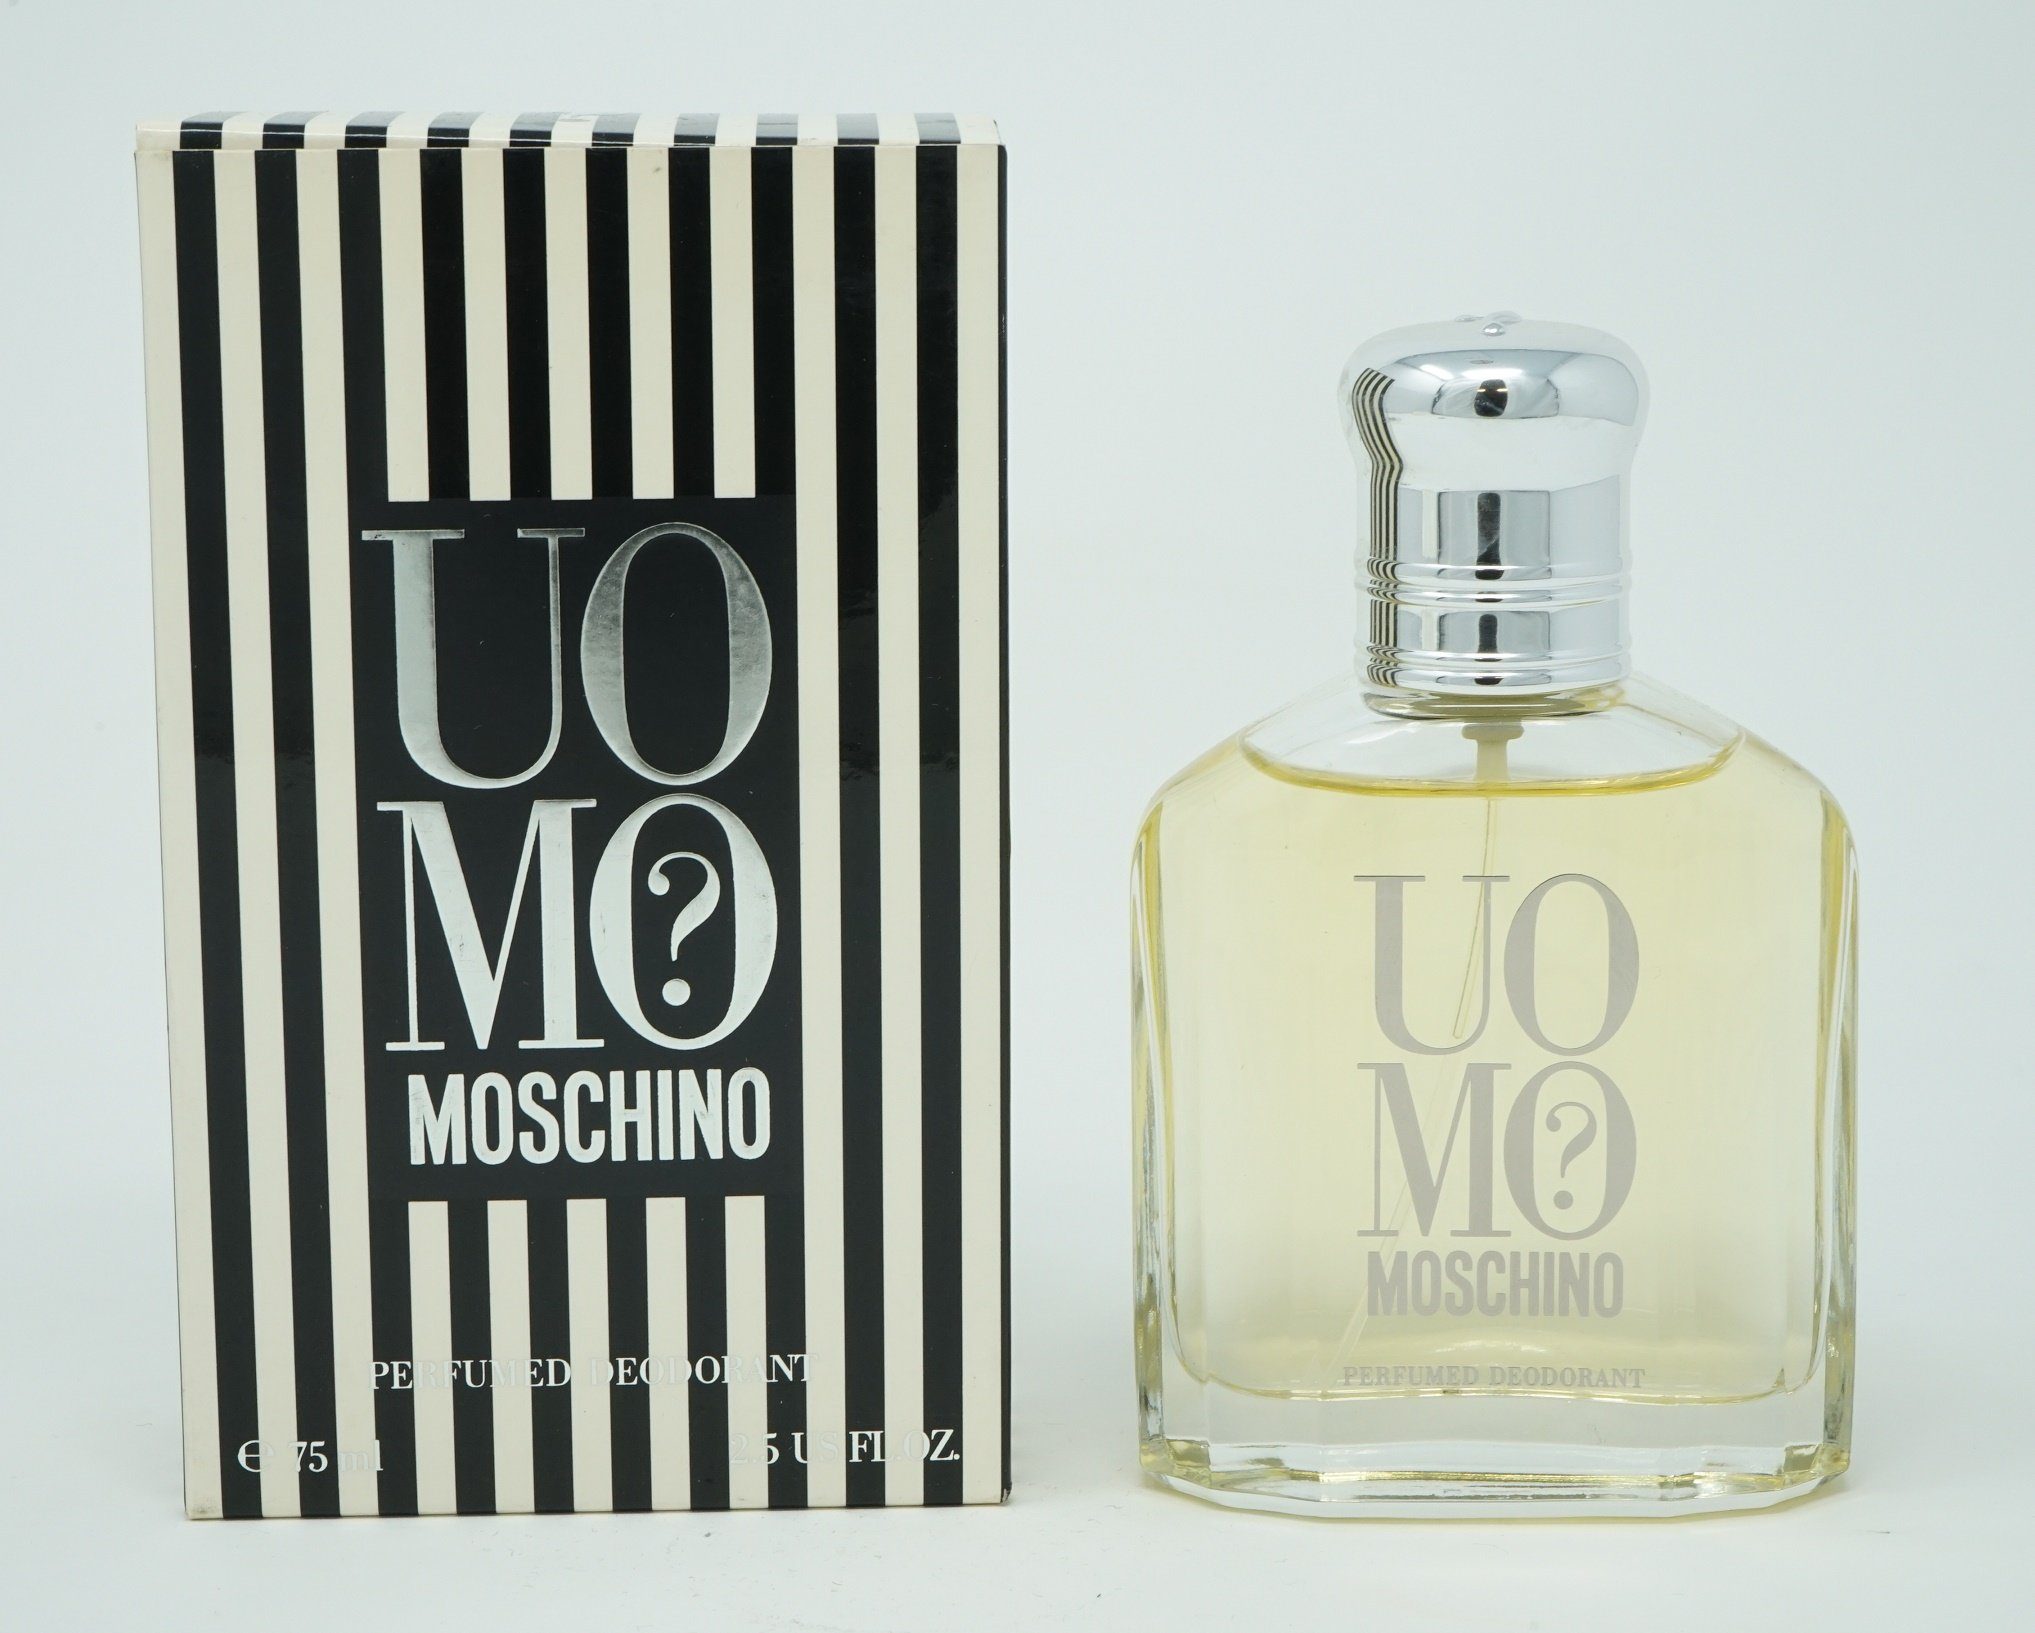 Moschino Perfumed 75ml Uomo Moschino Körperspray Spray Deodorant